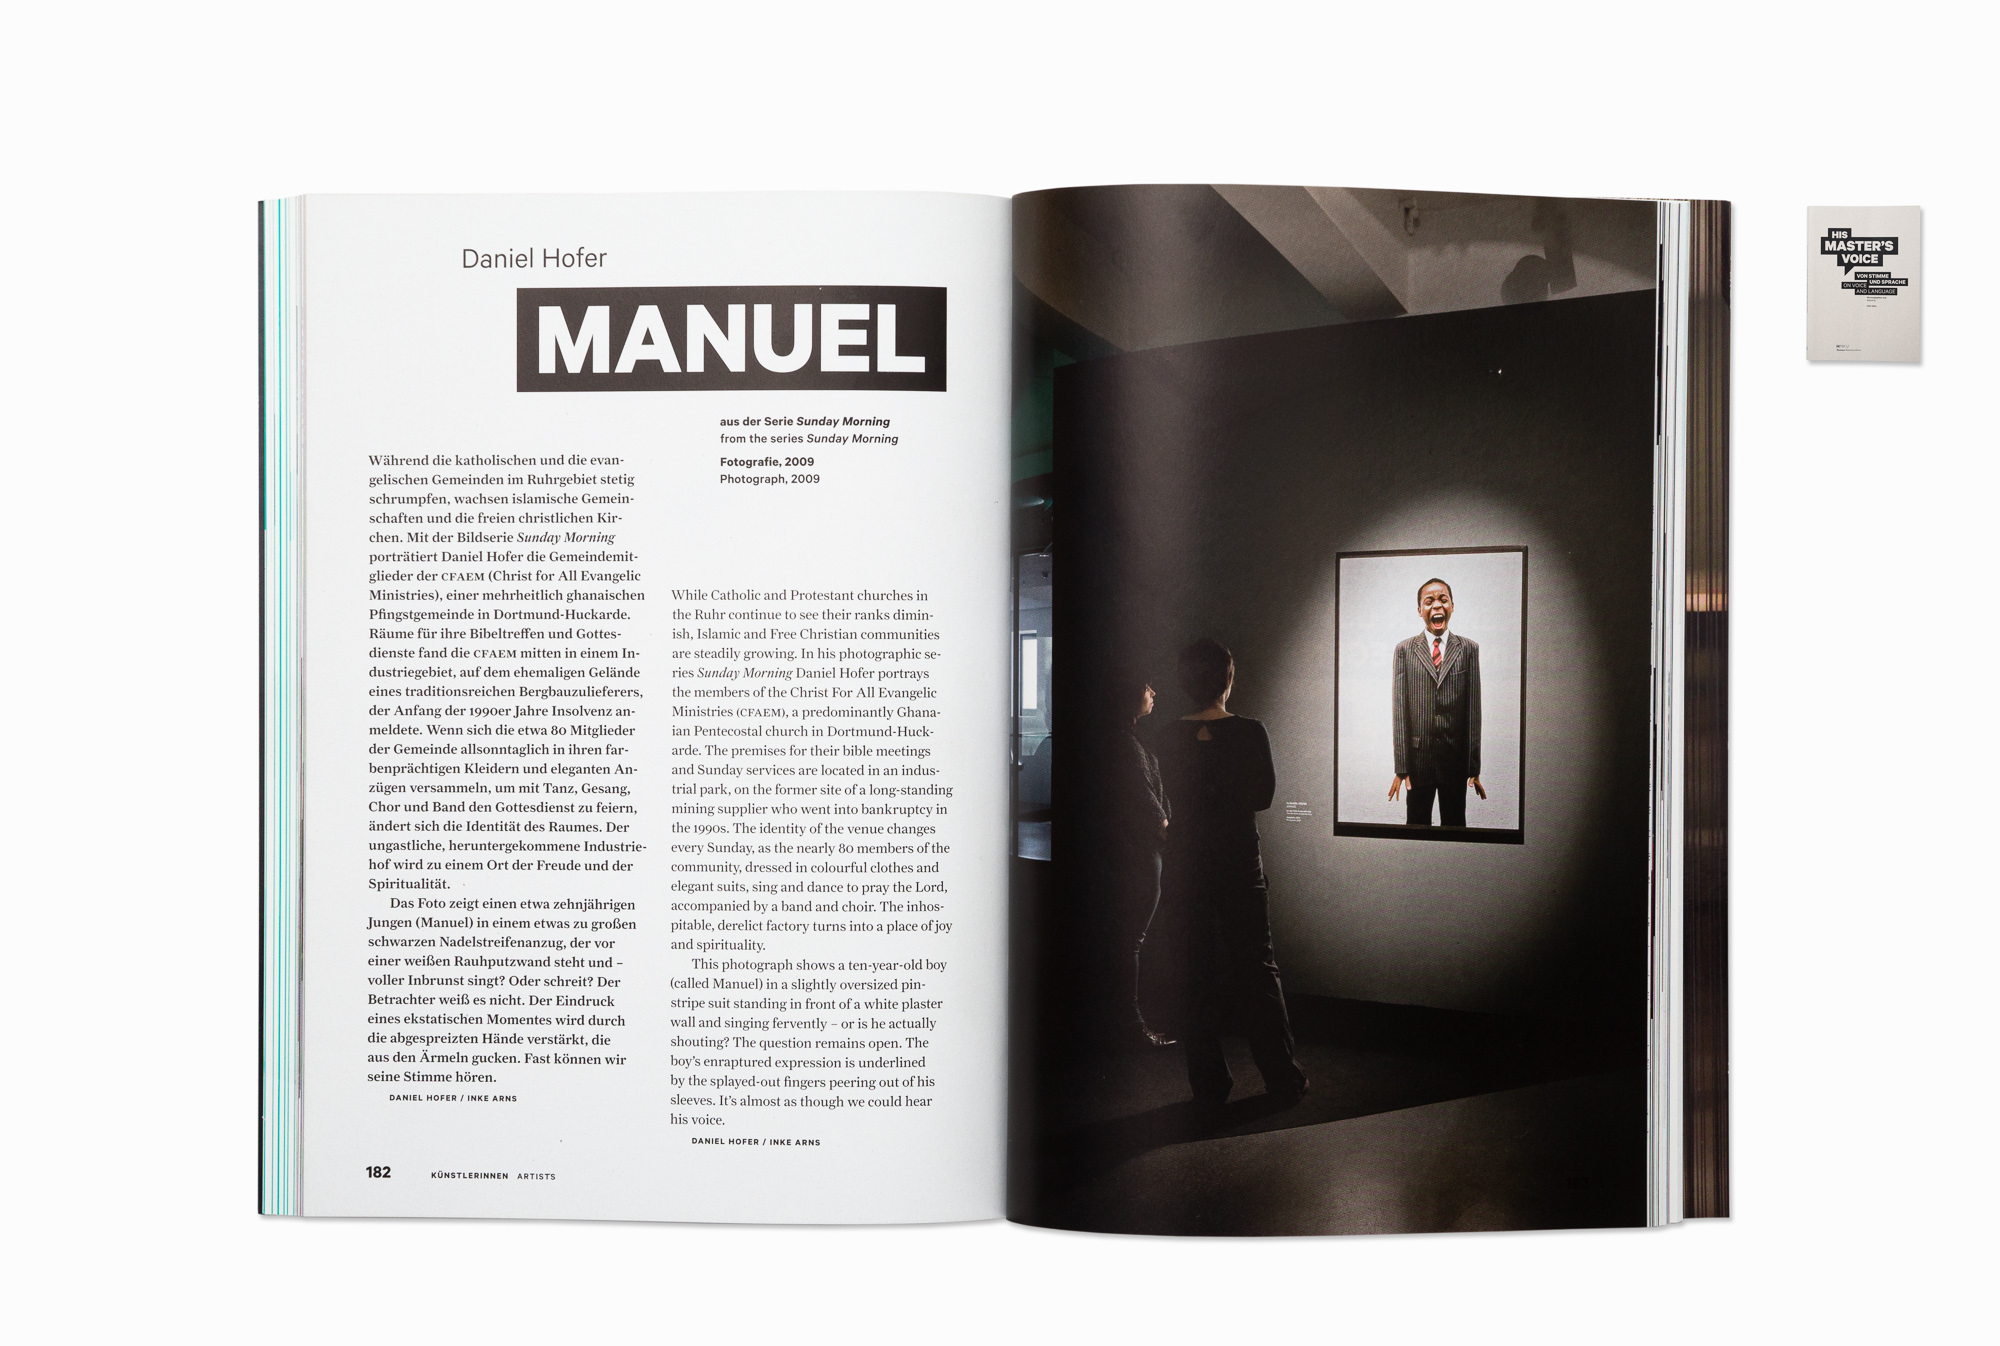   Manuel from the series "Sunday Morning", exhibition catalogue, "His master's voice", Hartware MedienKunstVerein HMKV Dortmund, 2013  